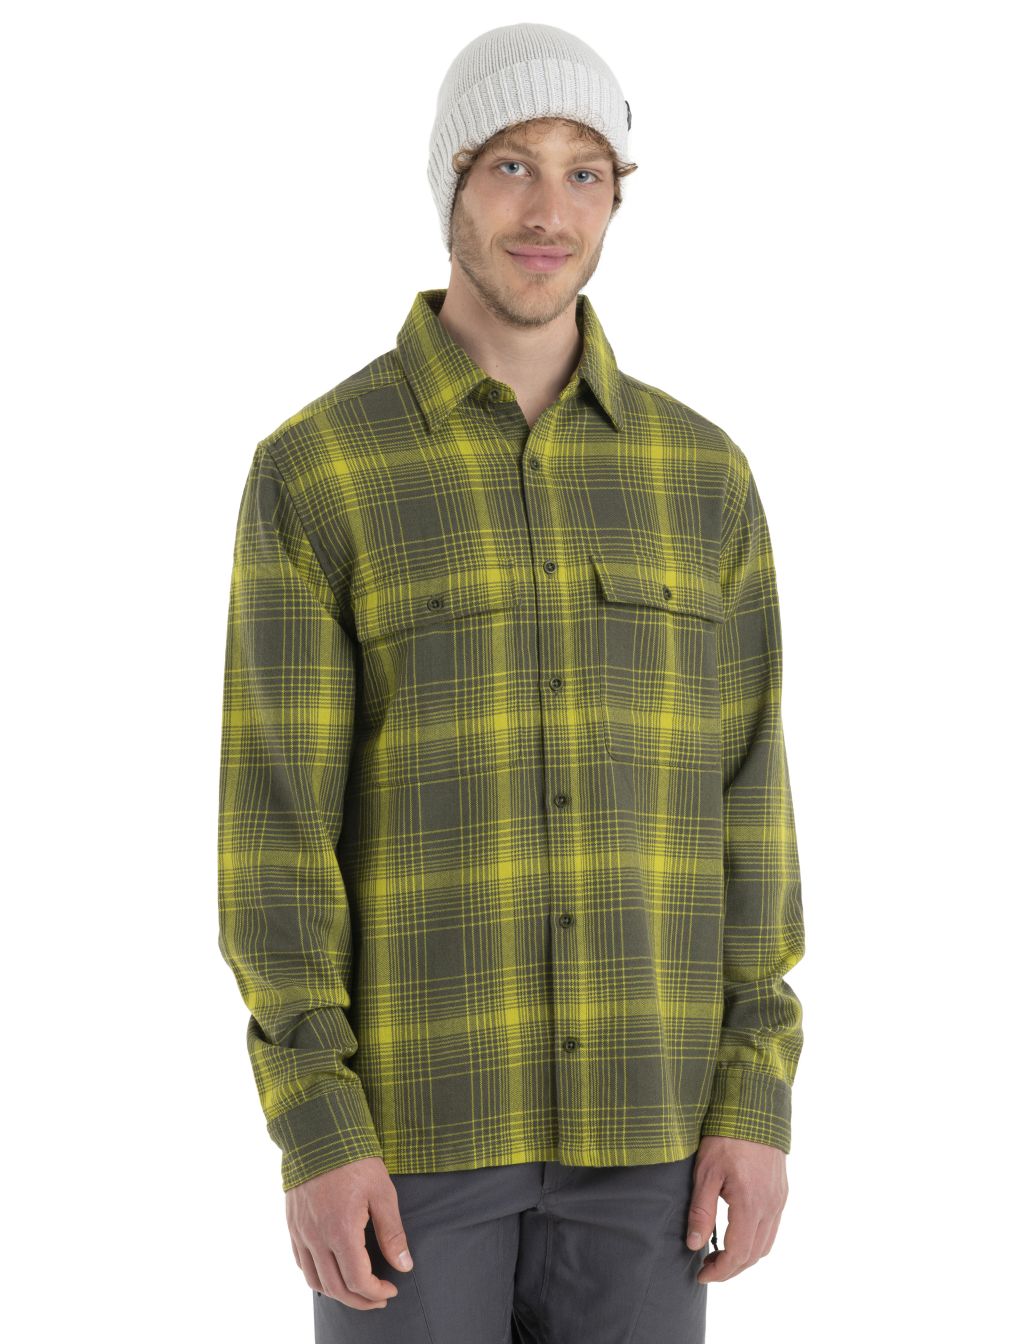 Pánská merino košile dlouhý rukáv ICEBREAKER Mens Dawnder LS Flannel Shirt Plaid, Loden/Bio Lime velikost: L